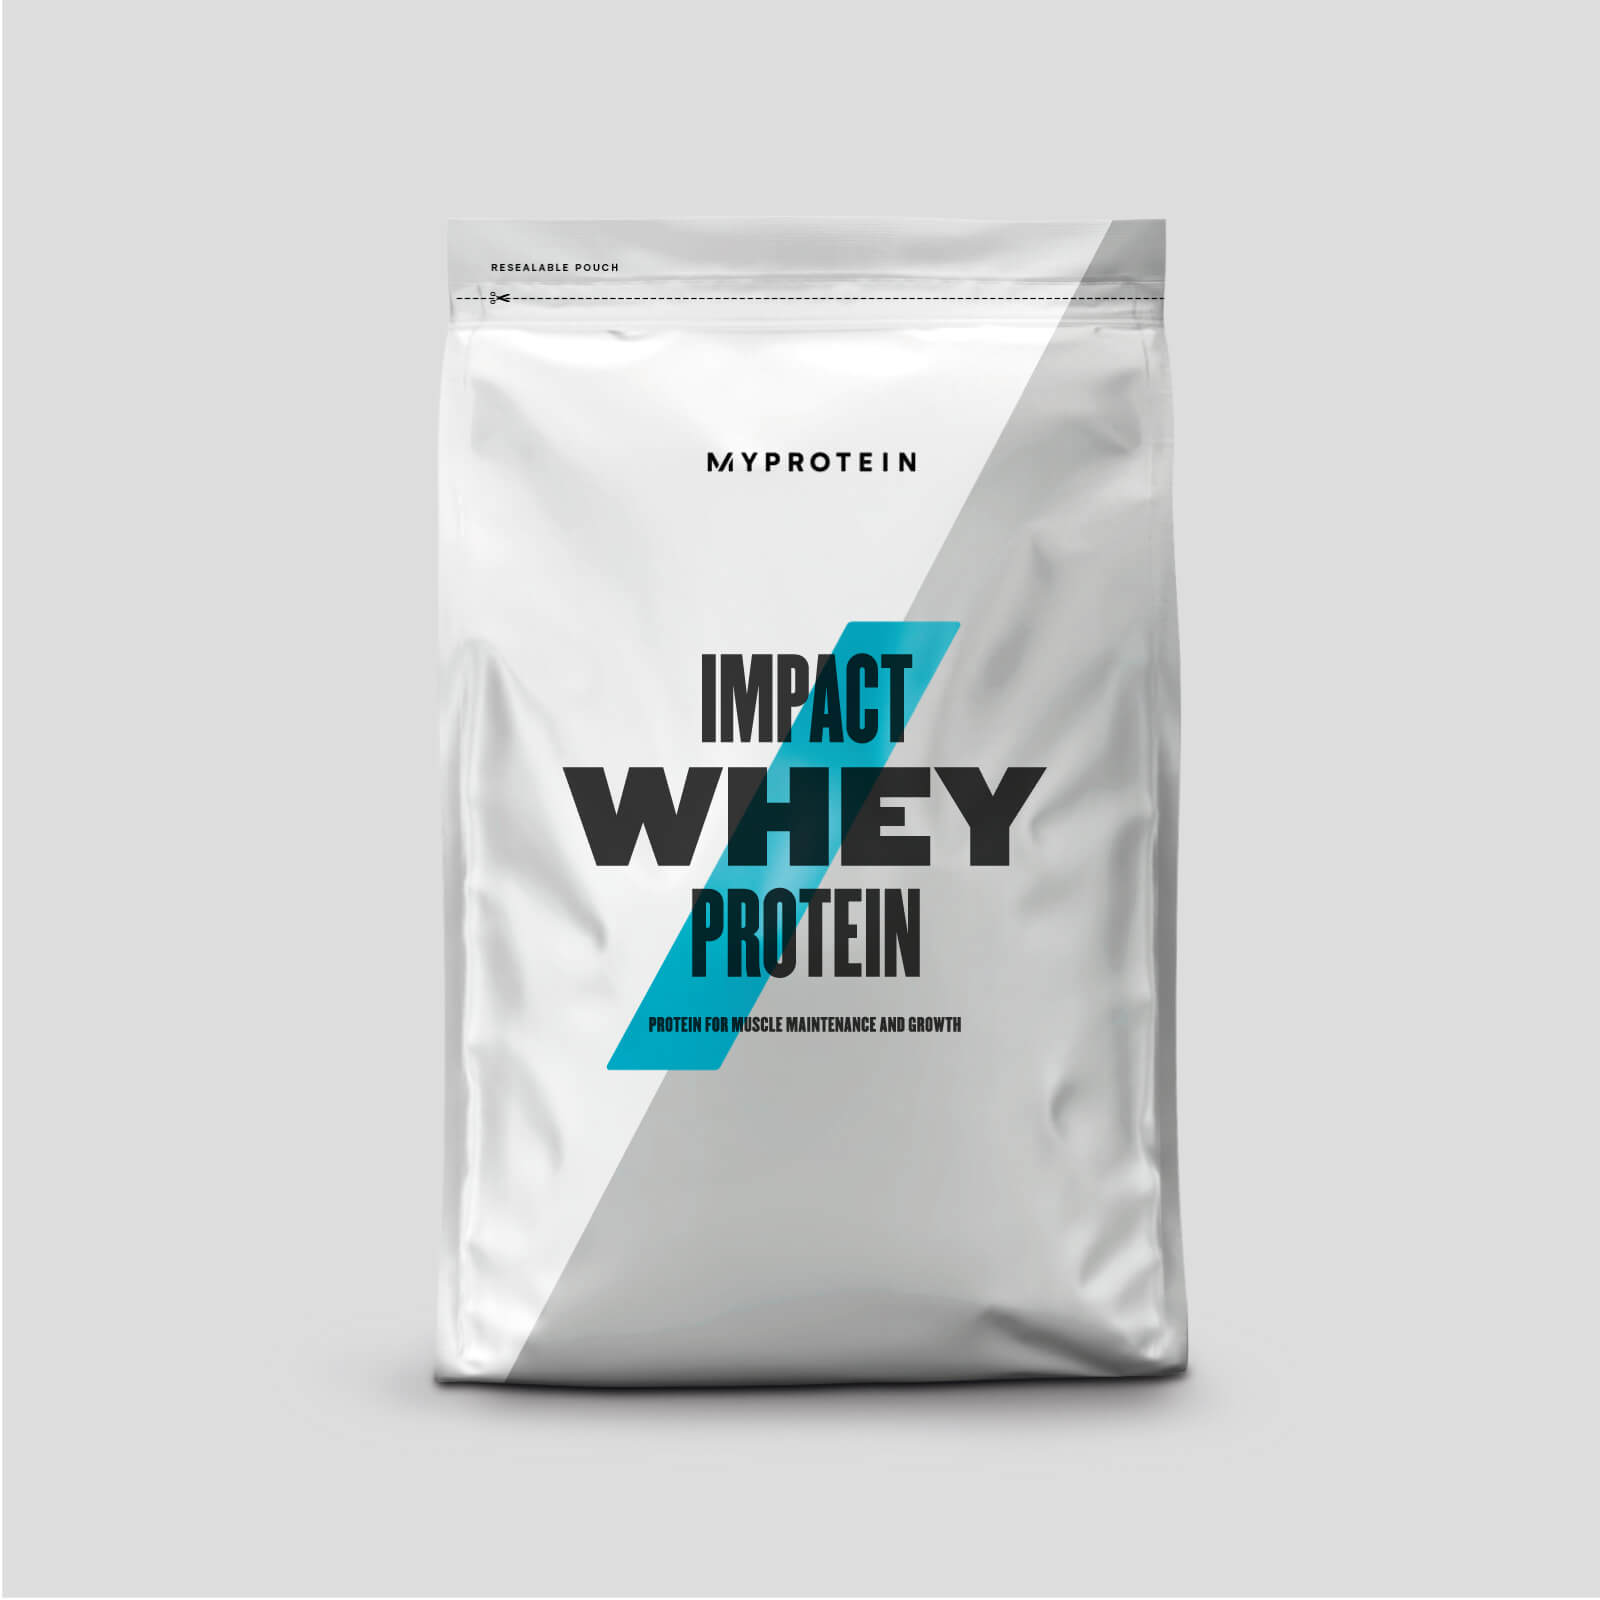 Myprotein Impact Whey Protein - 500g - Chocolate Brownie